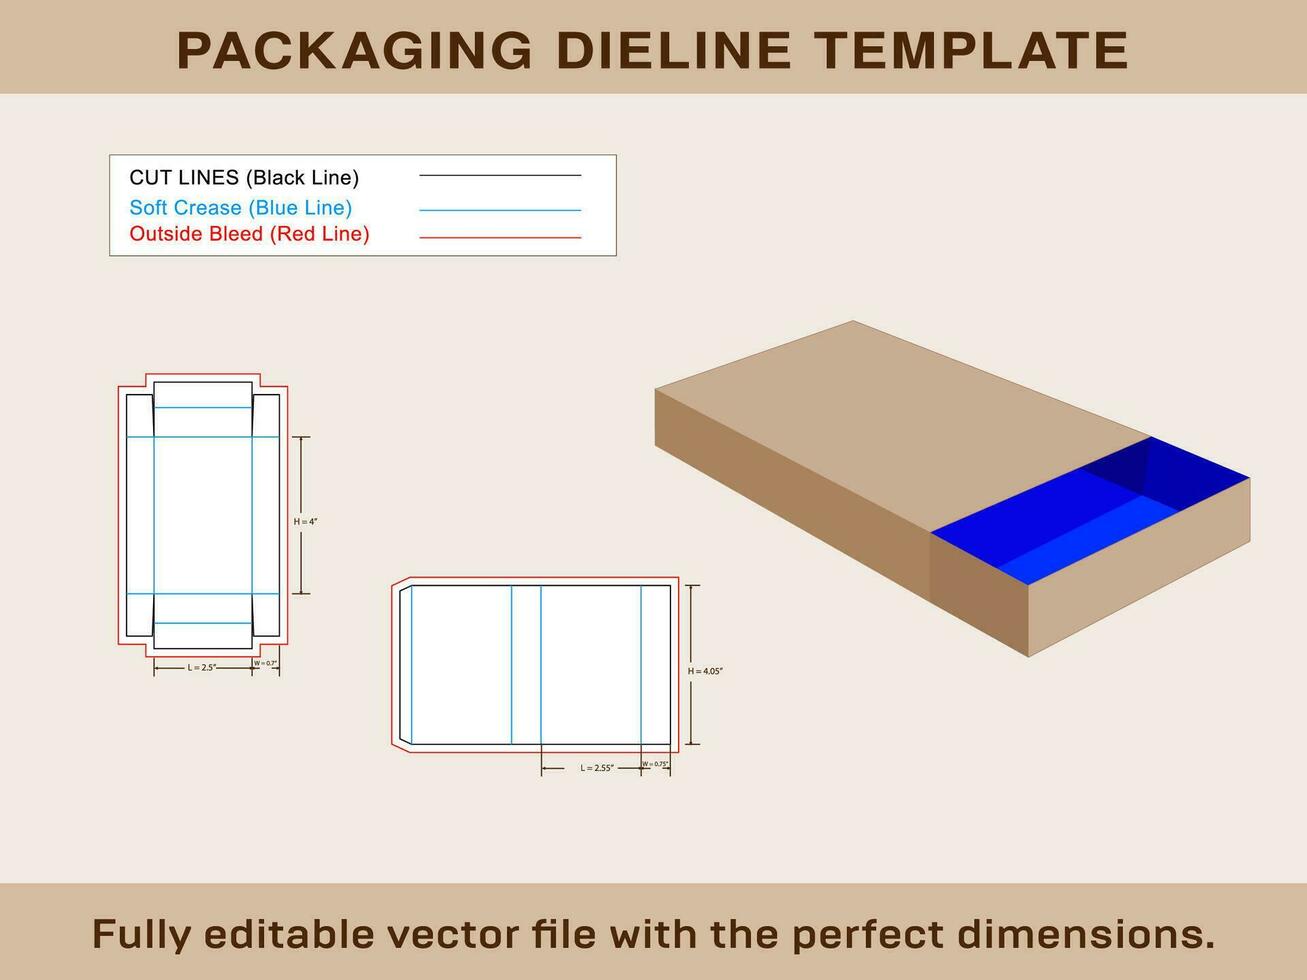 Match Box, Drawer box, sliding box, Dieline Template and 3d box vector